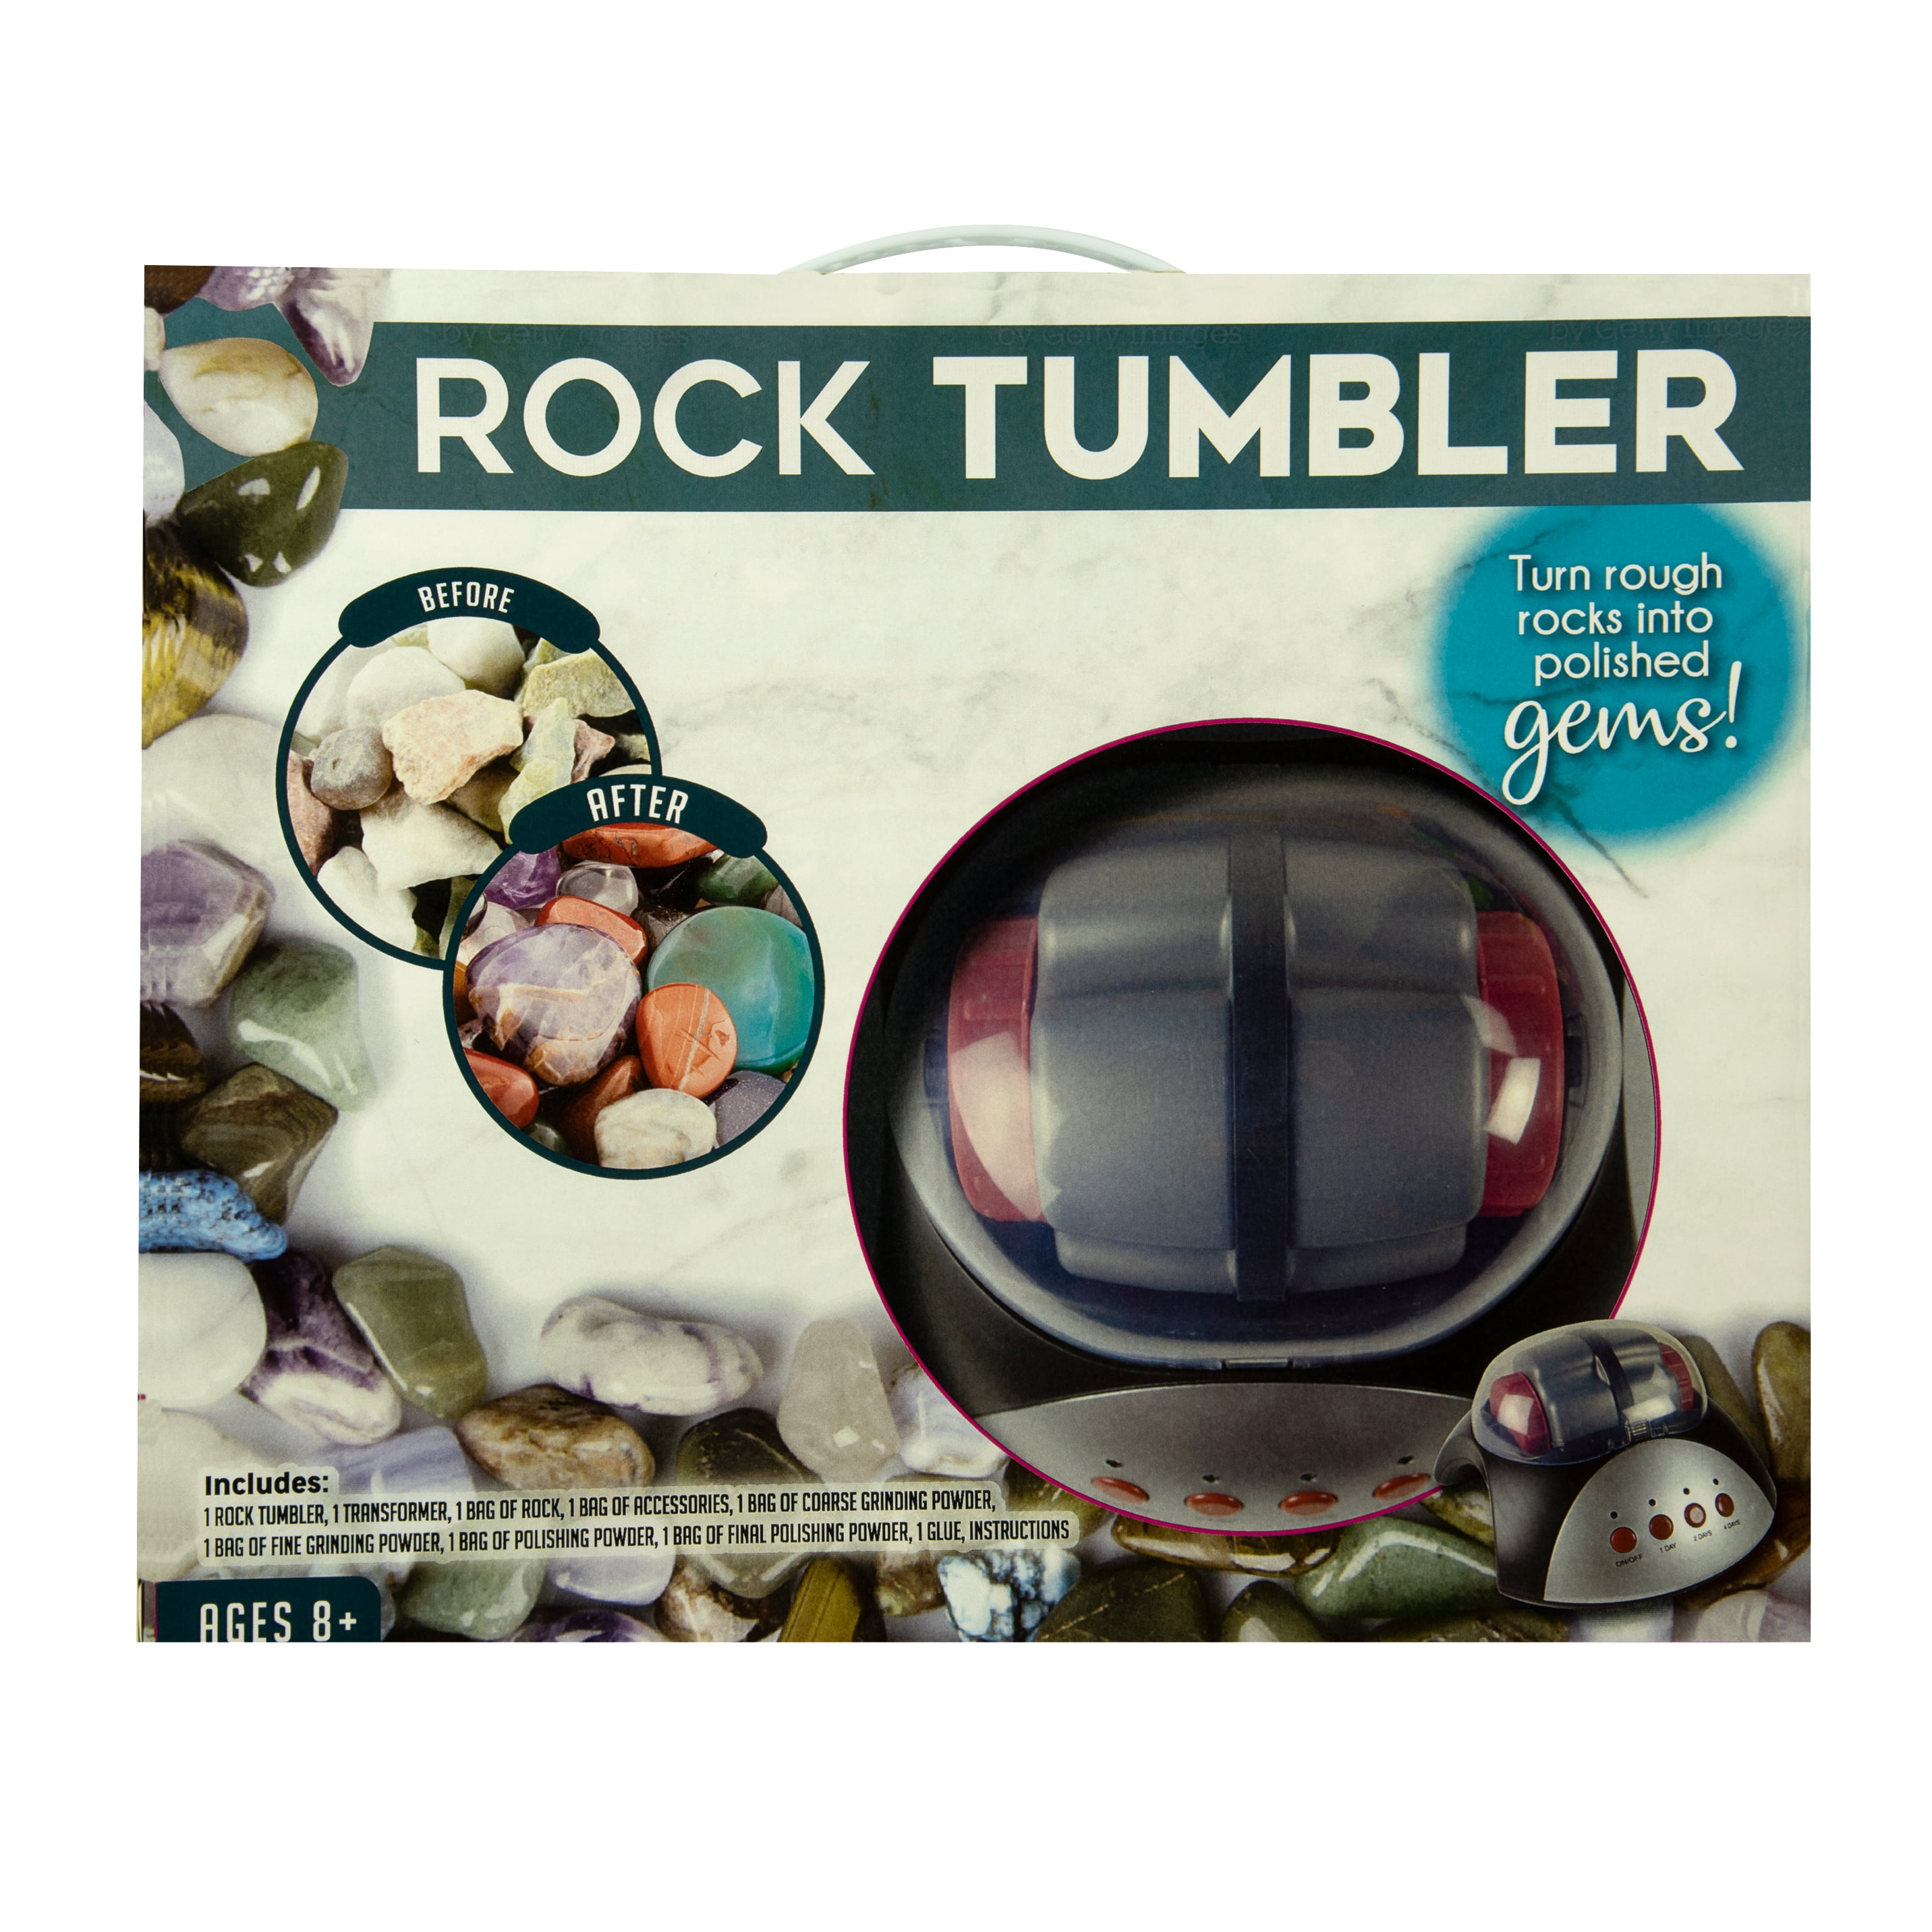 Gener8 Rock Tumbler Activity Kit Create Polished Stones for sale online